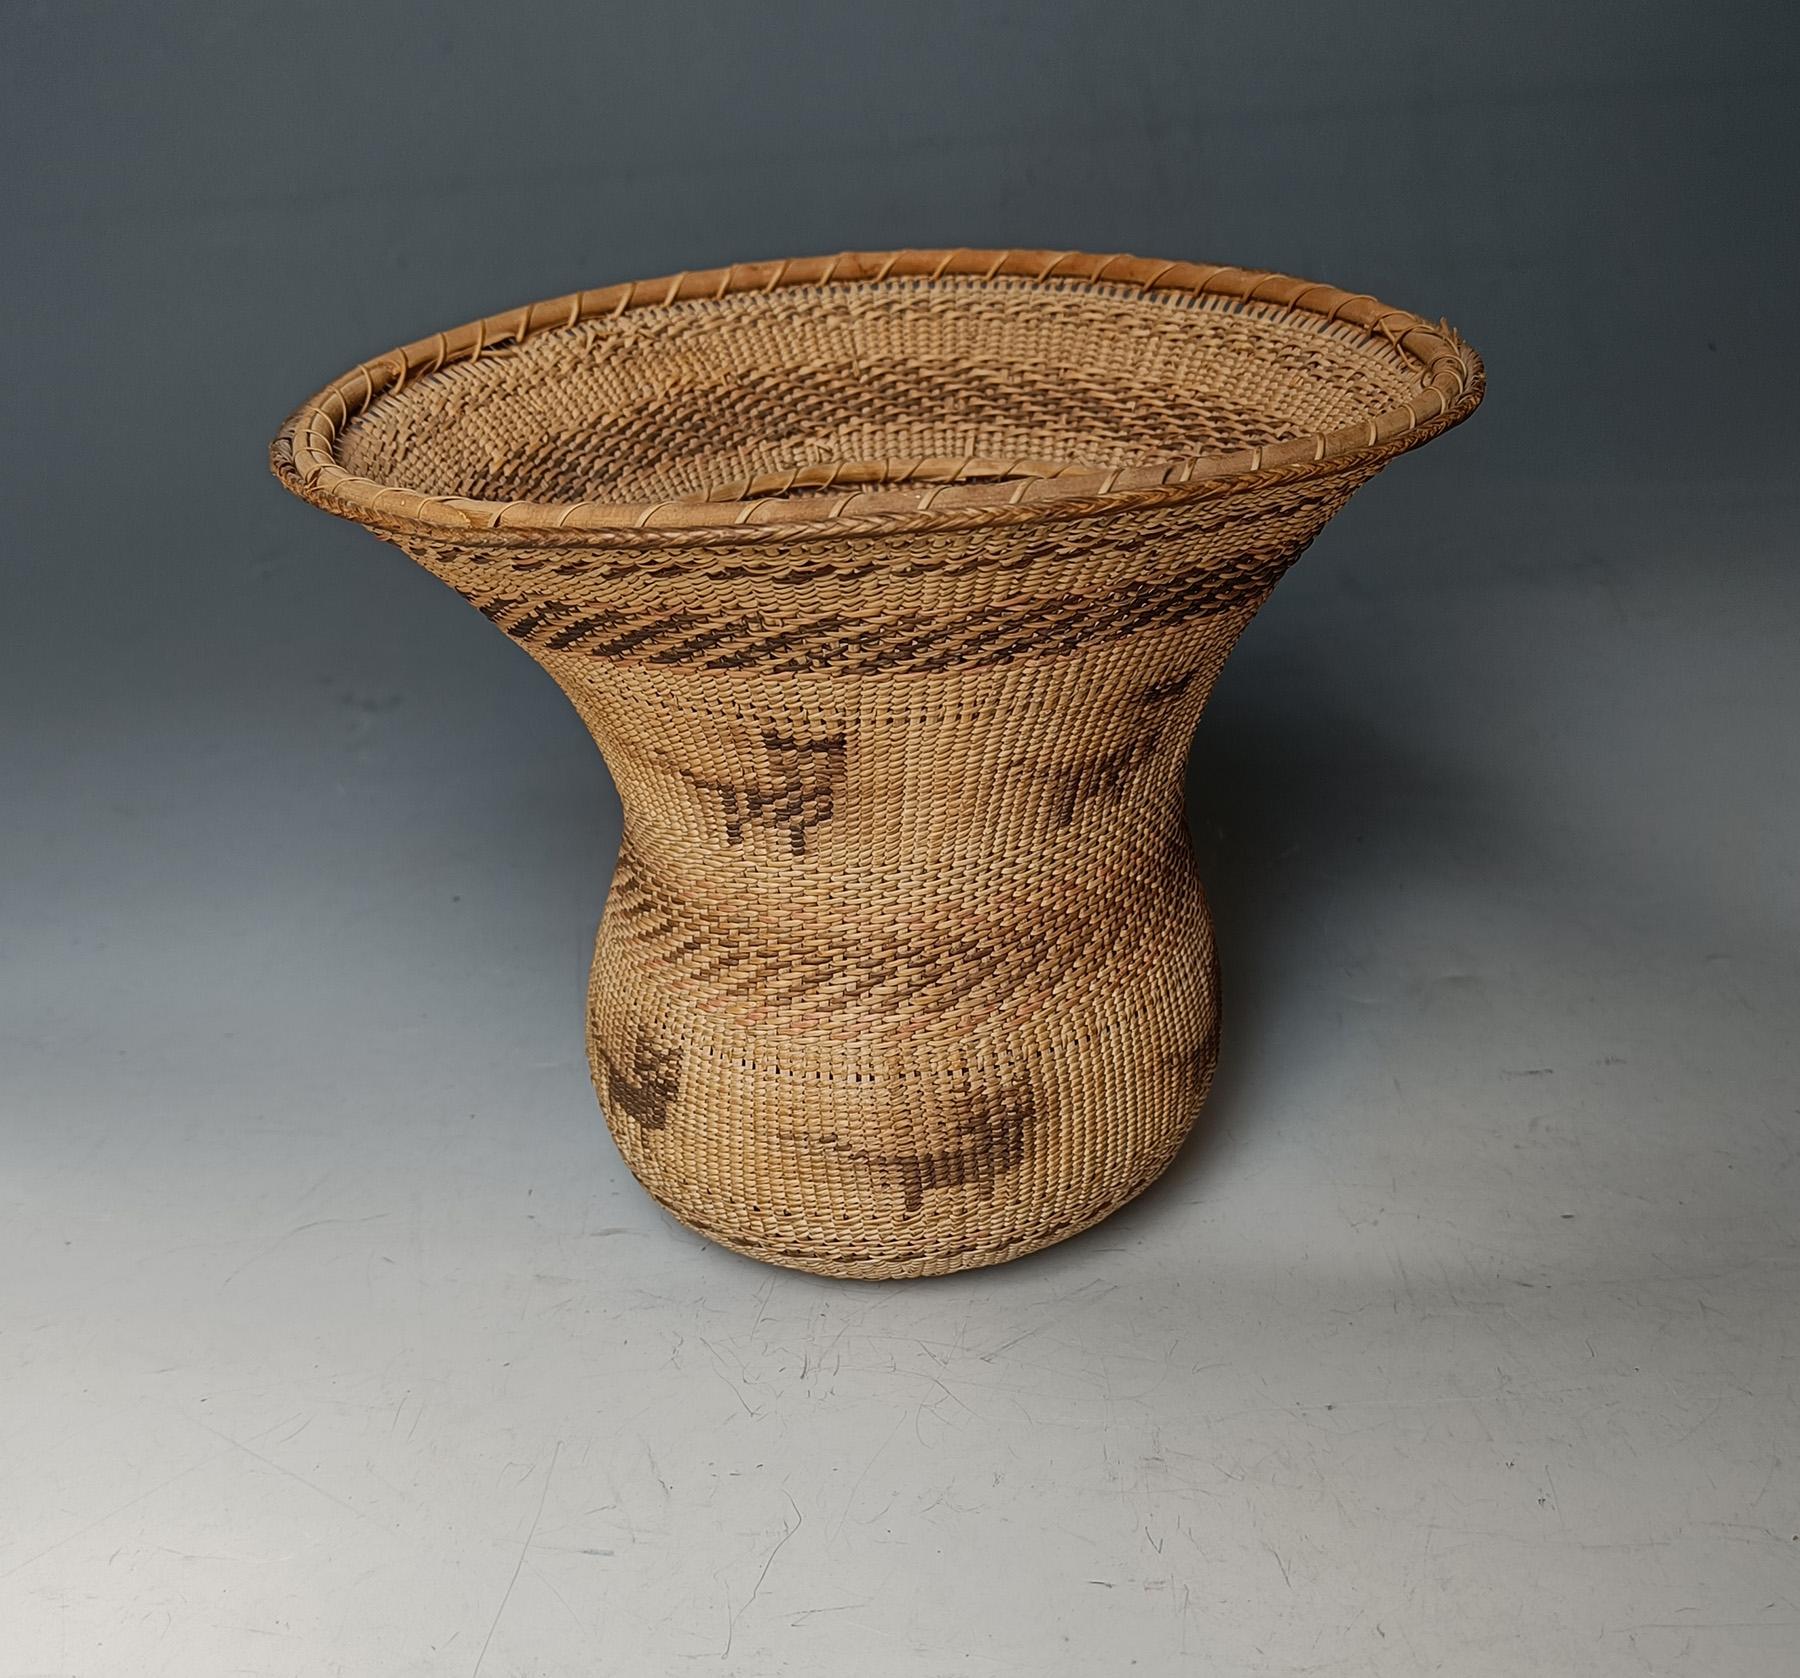 Indonesian Amazon Indian Basket Yekuana Native Tribe South America Amazonian Interiors  For Sale